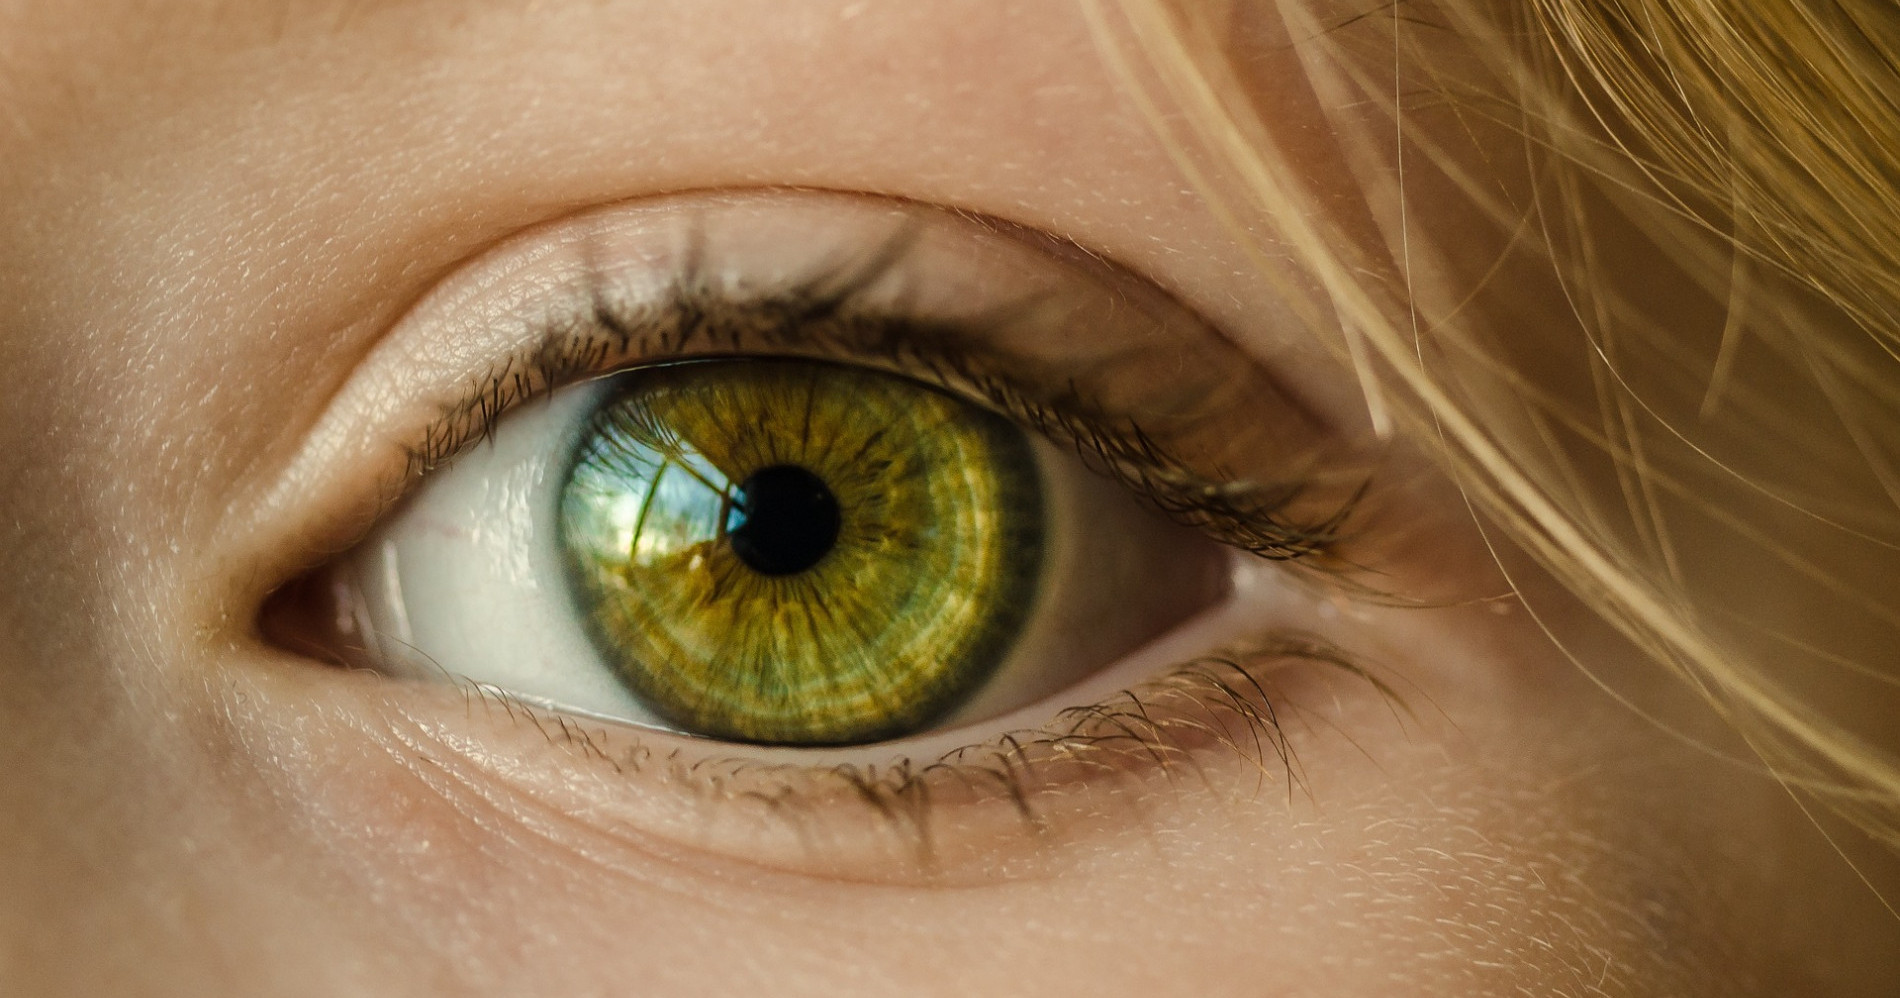 Mata merupakan salah satu organ penting kita